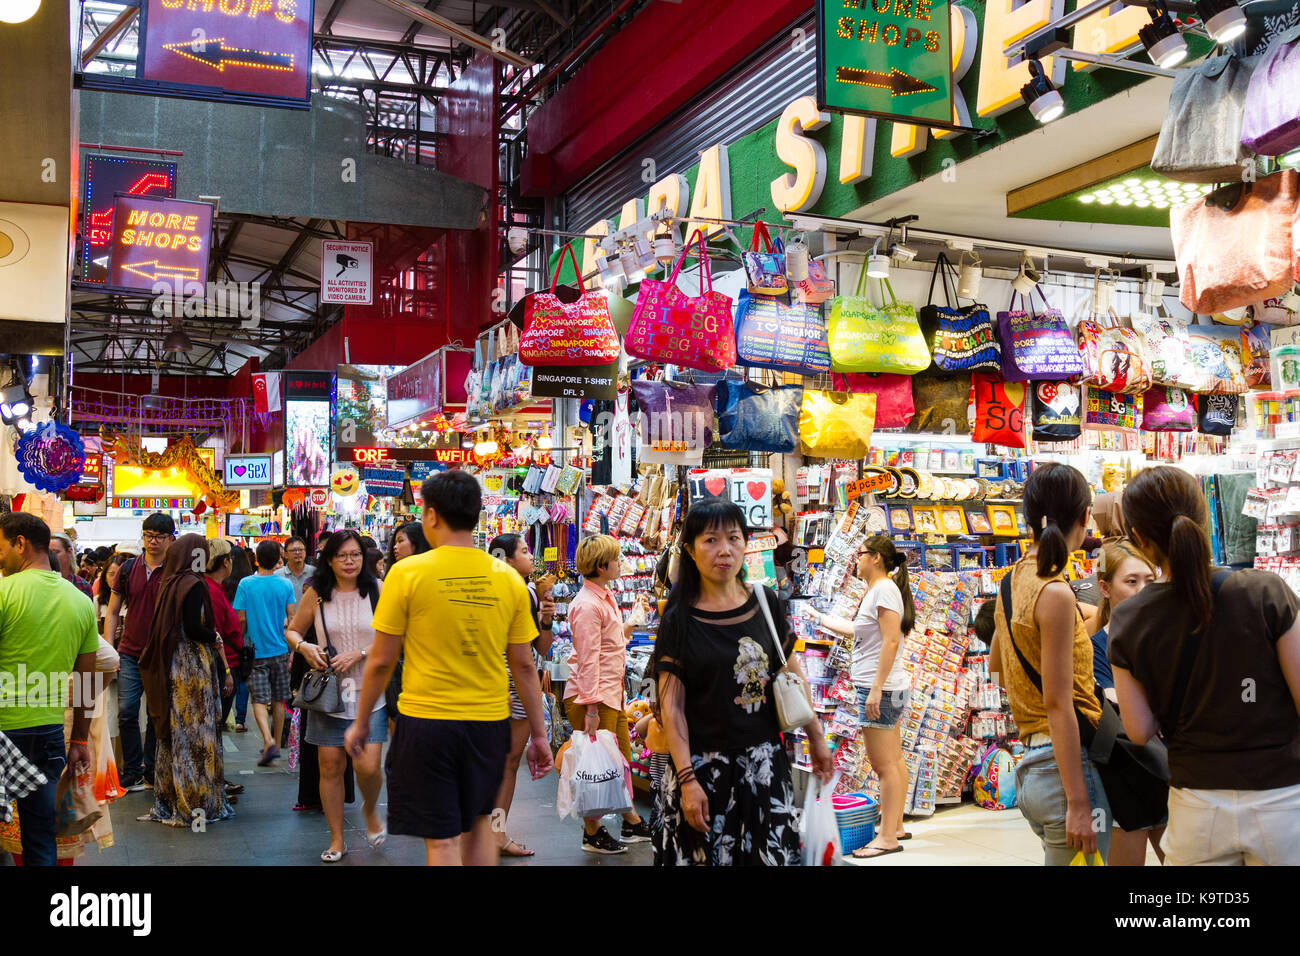 Singapur - September 7, 2017: Käufer an der berühmten Bugis Street Market, ein Schnäppchen für billige Lebensmittel bekannt; Kleidung, Souvenirs, Elektronik, Stockfoto